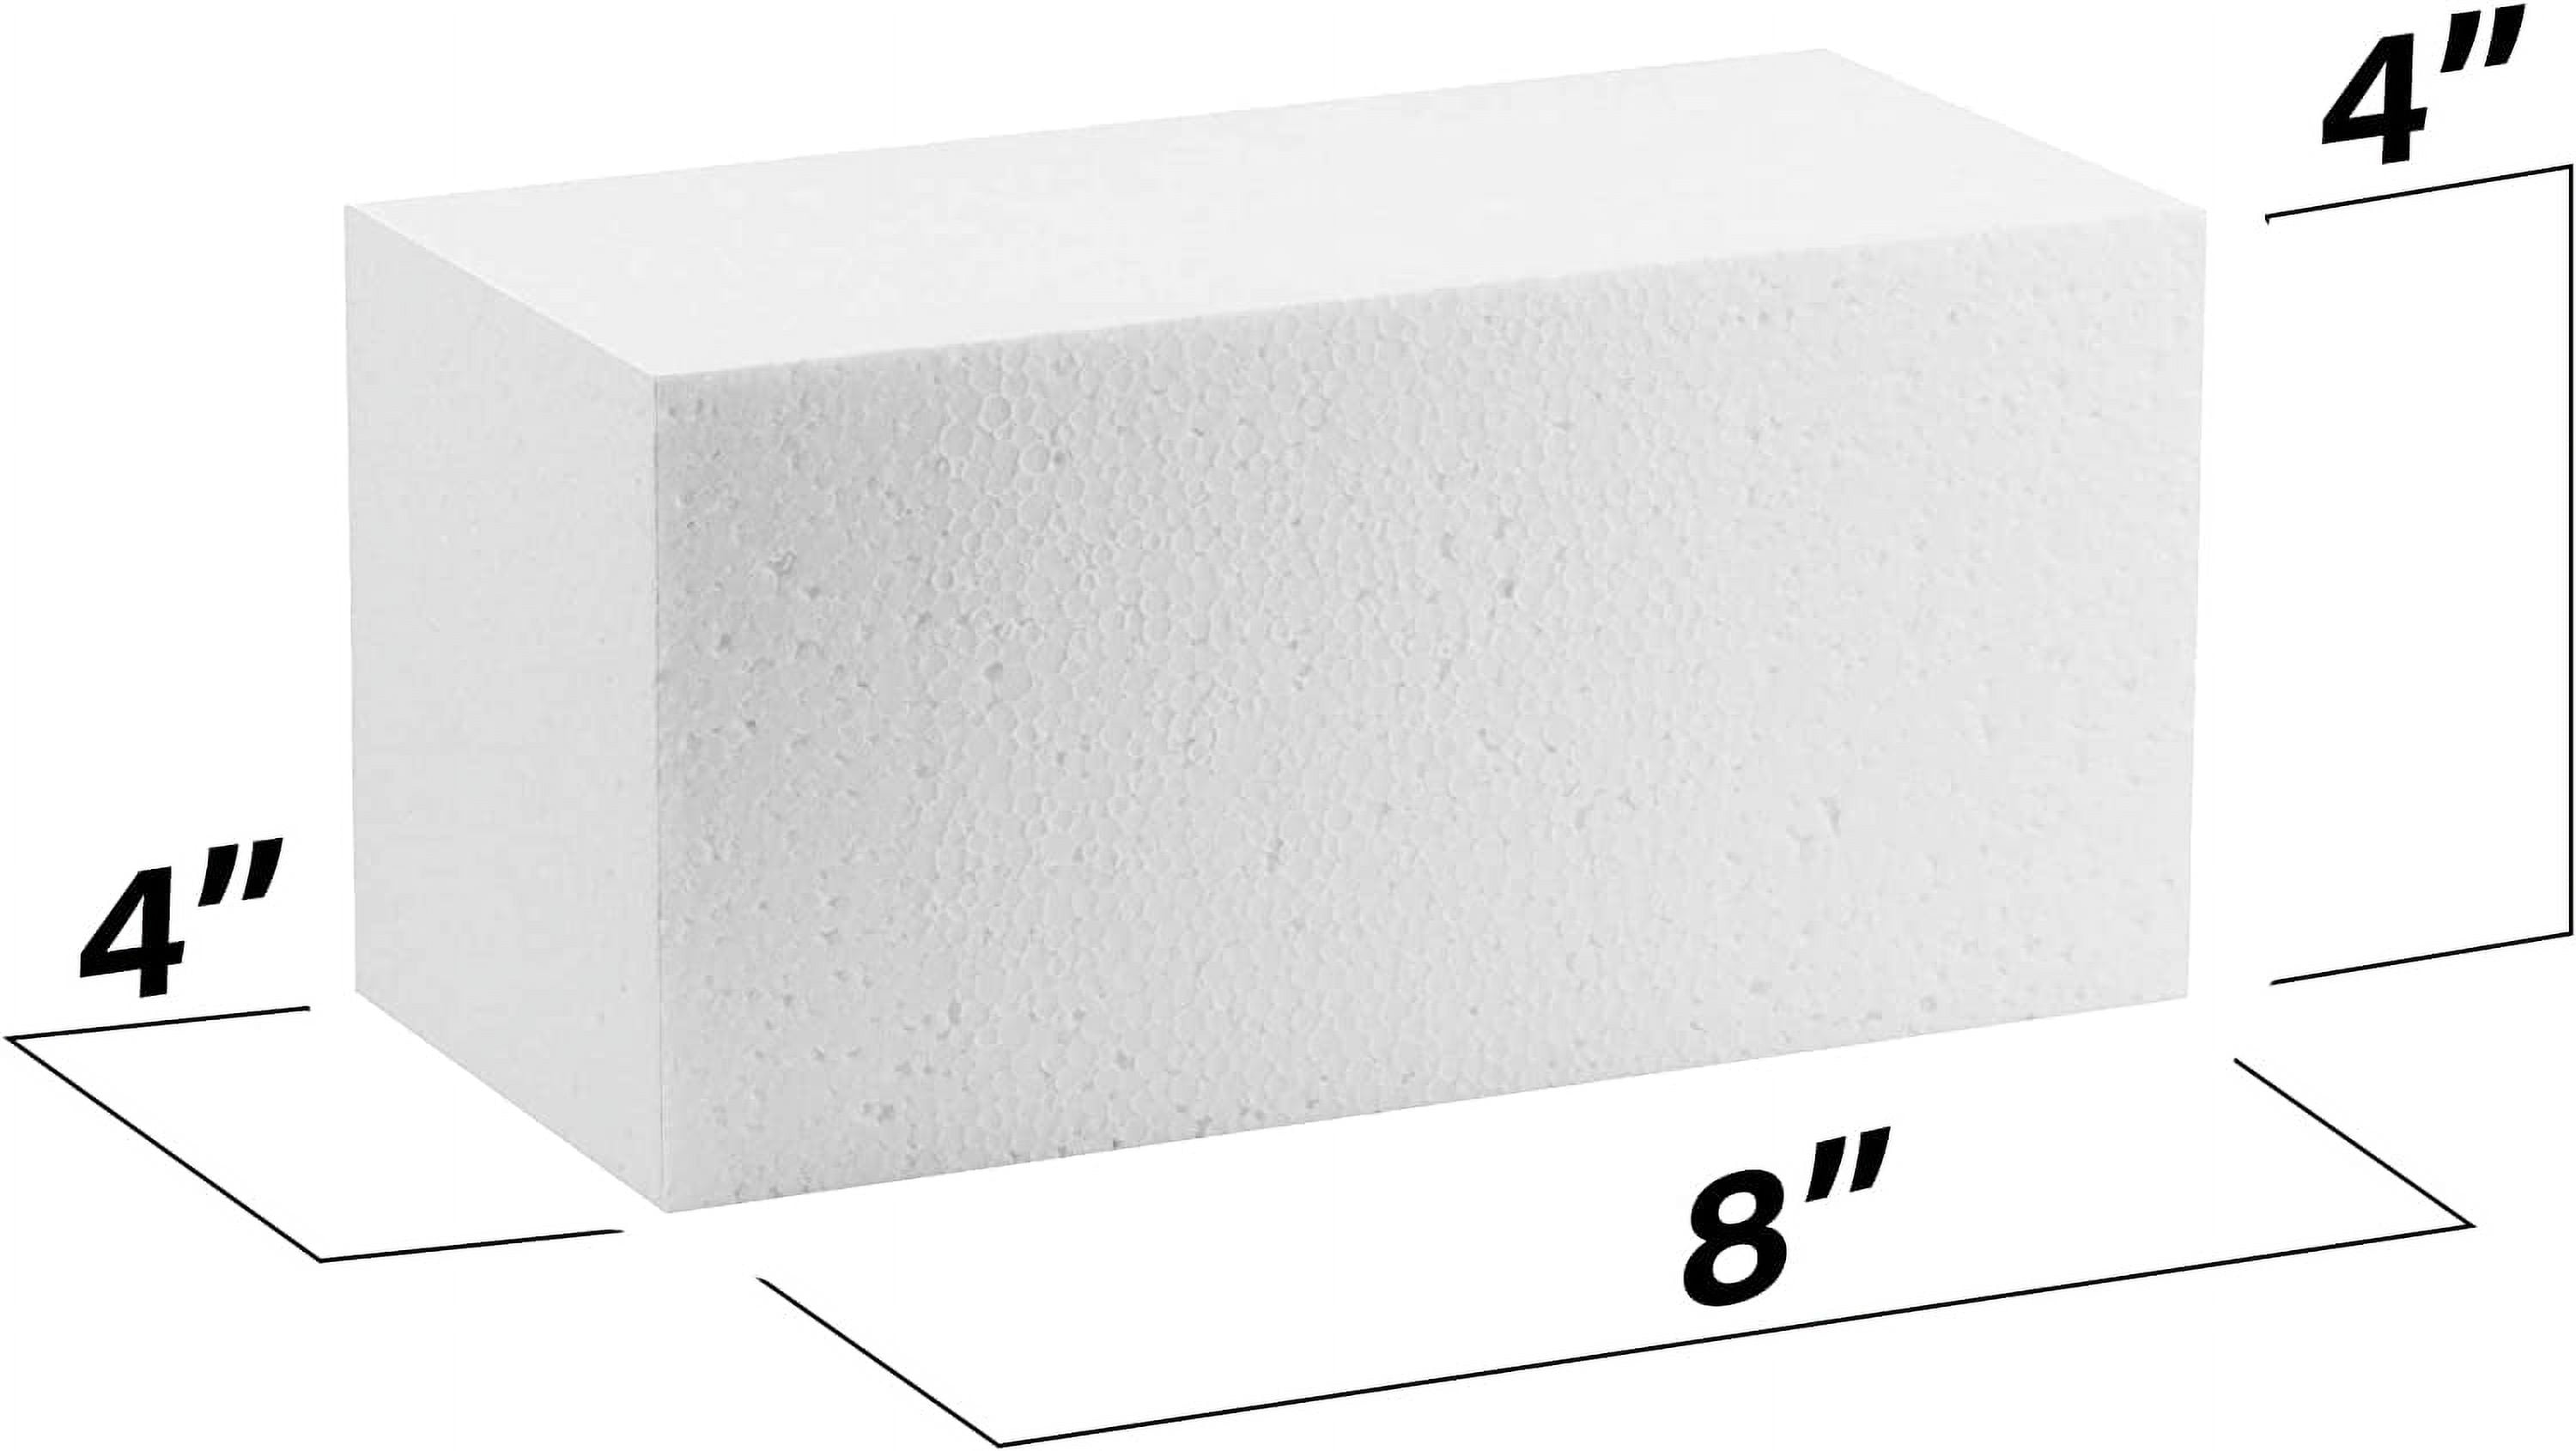 EPS Foam Block - 2 lb Density - 12x16x24 - Dino Rentos Studios, INC.